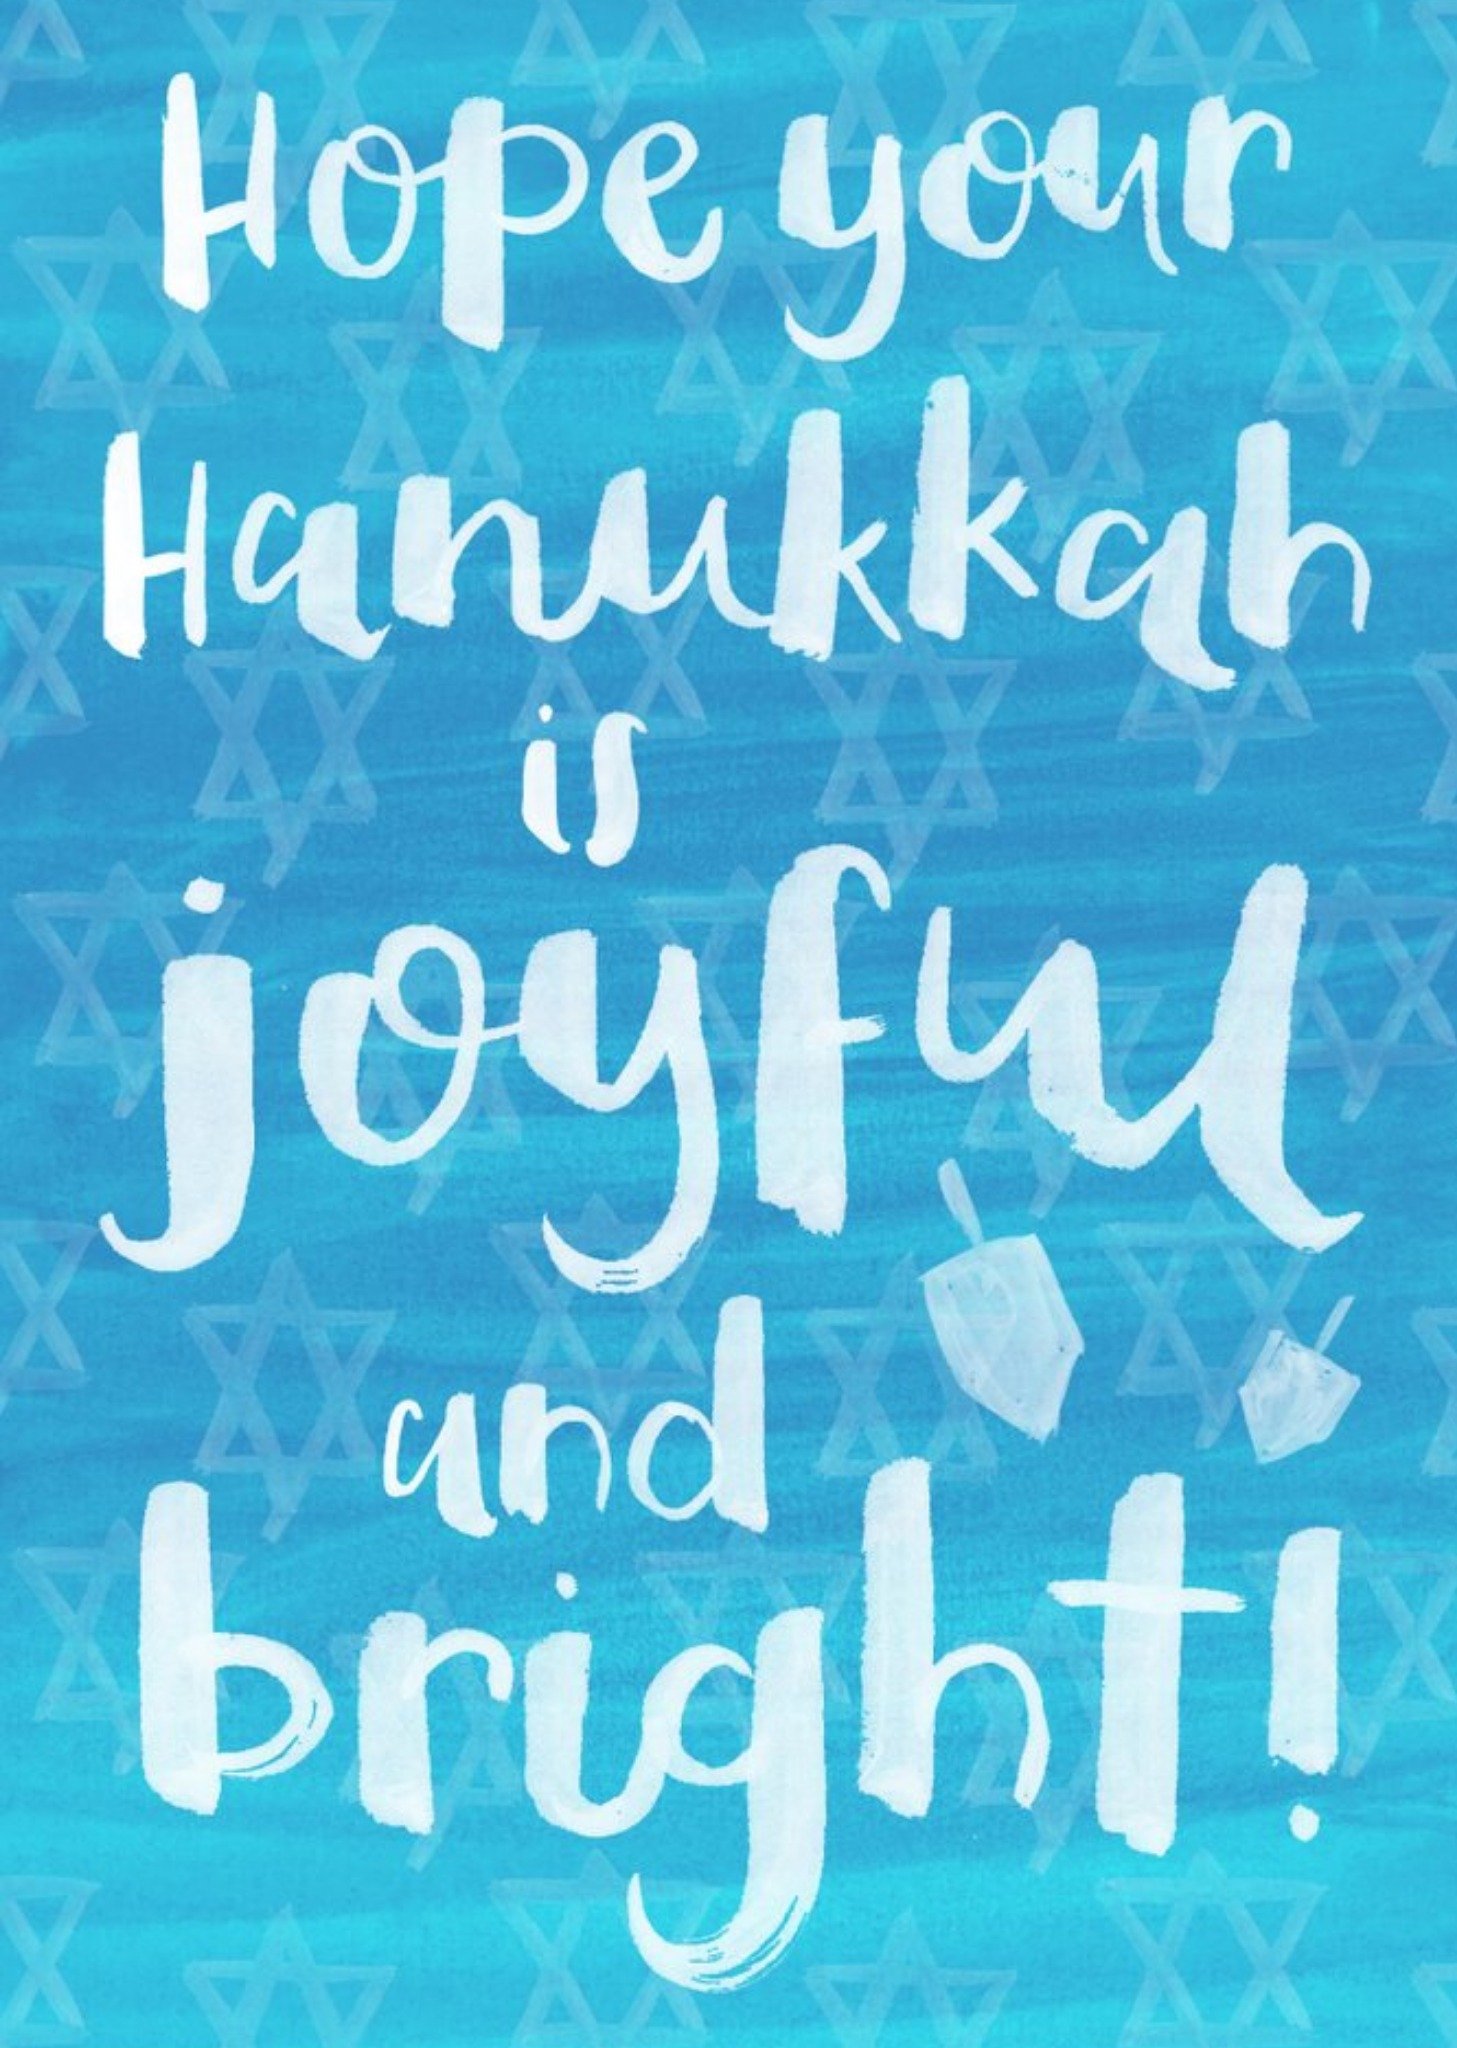 Moonpig Hope Your Hanukkah Is Joyful And Bright Personalised Happy Hanukkah Card, Large